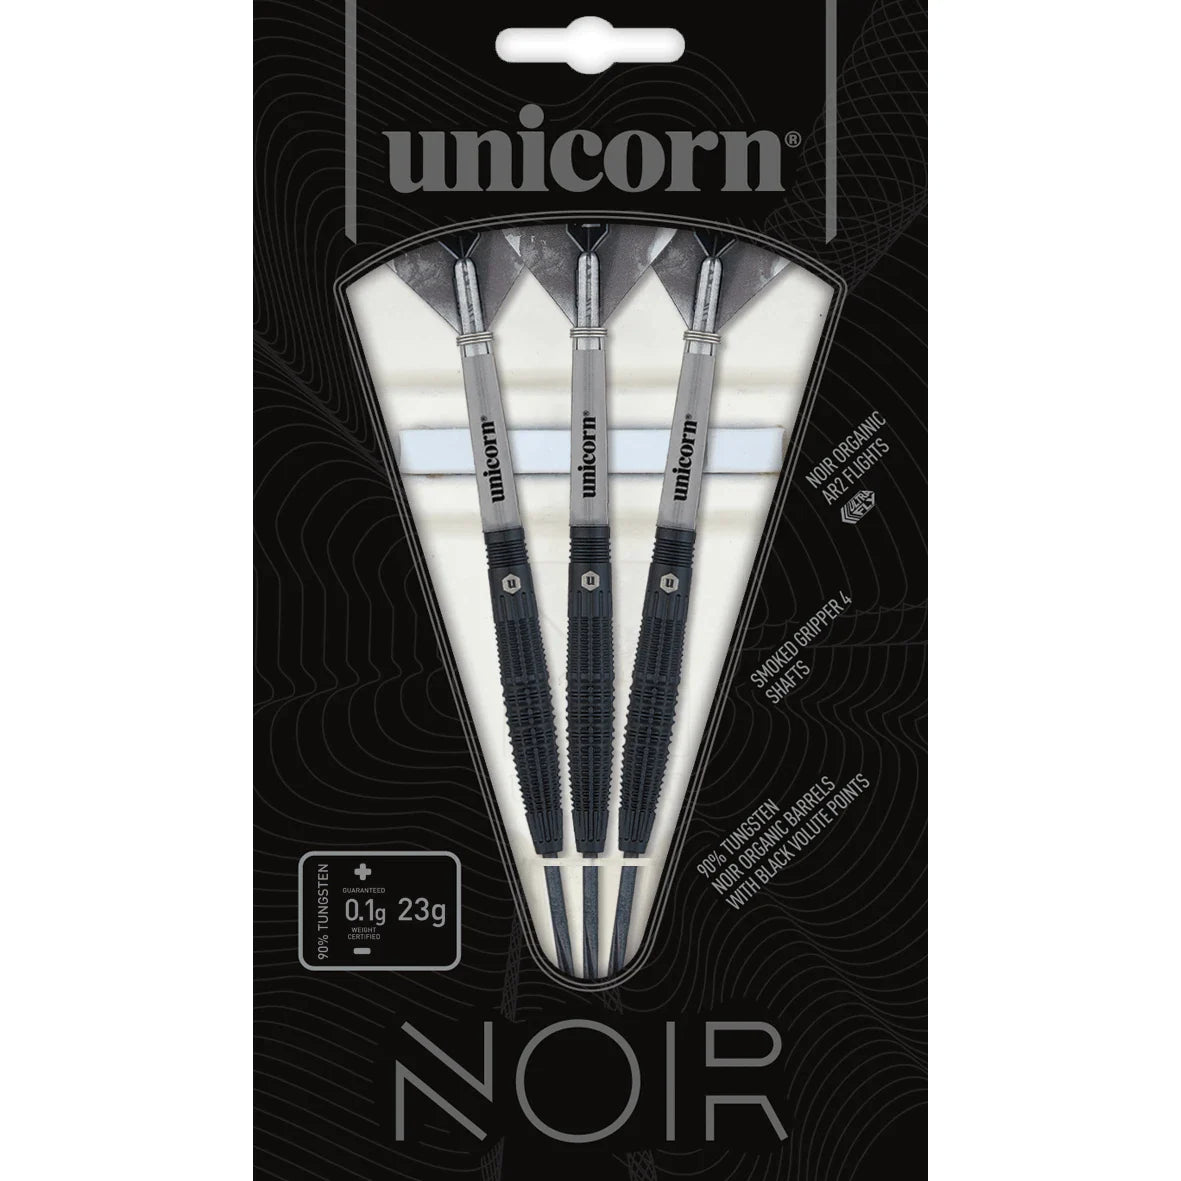 Unicorn Noir Style 2 21g Darts